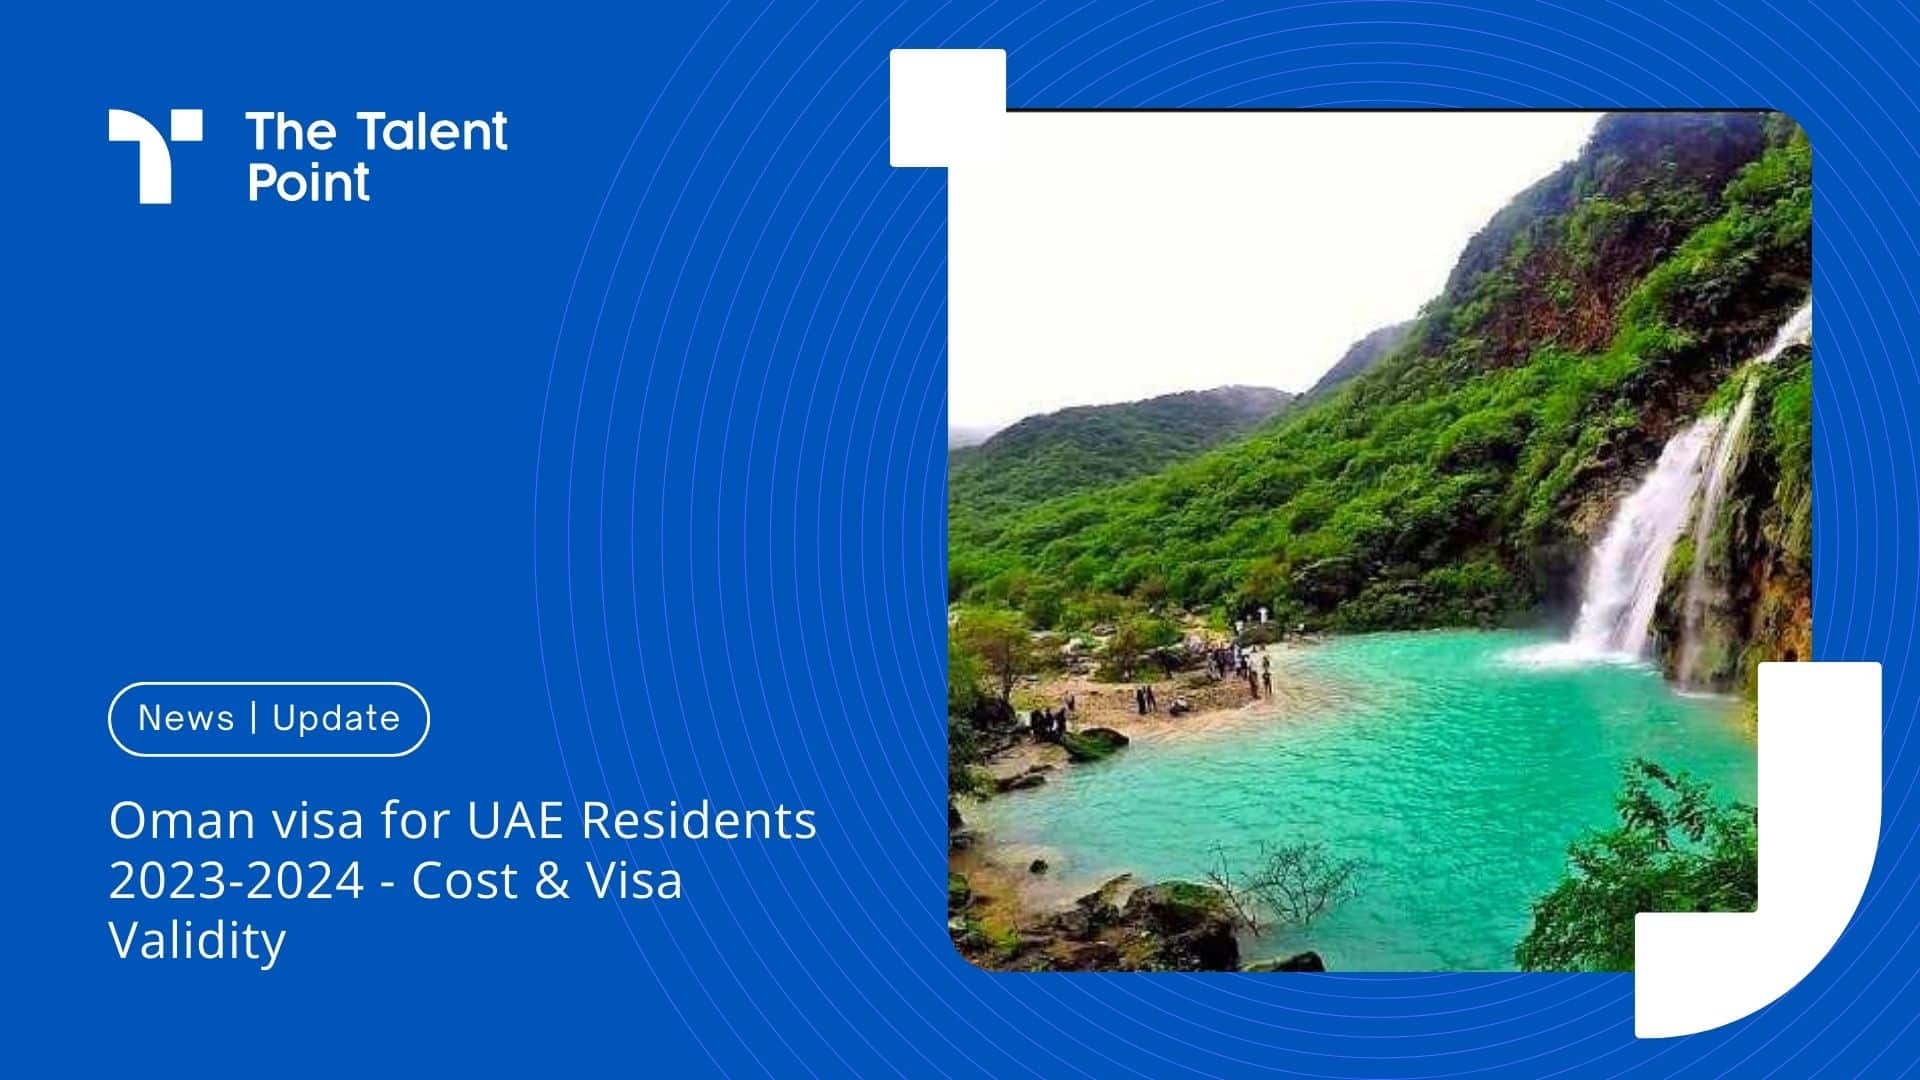 Oman visa for UAE Residents 2023-2024 - Cost & Visa Validity